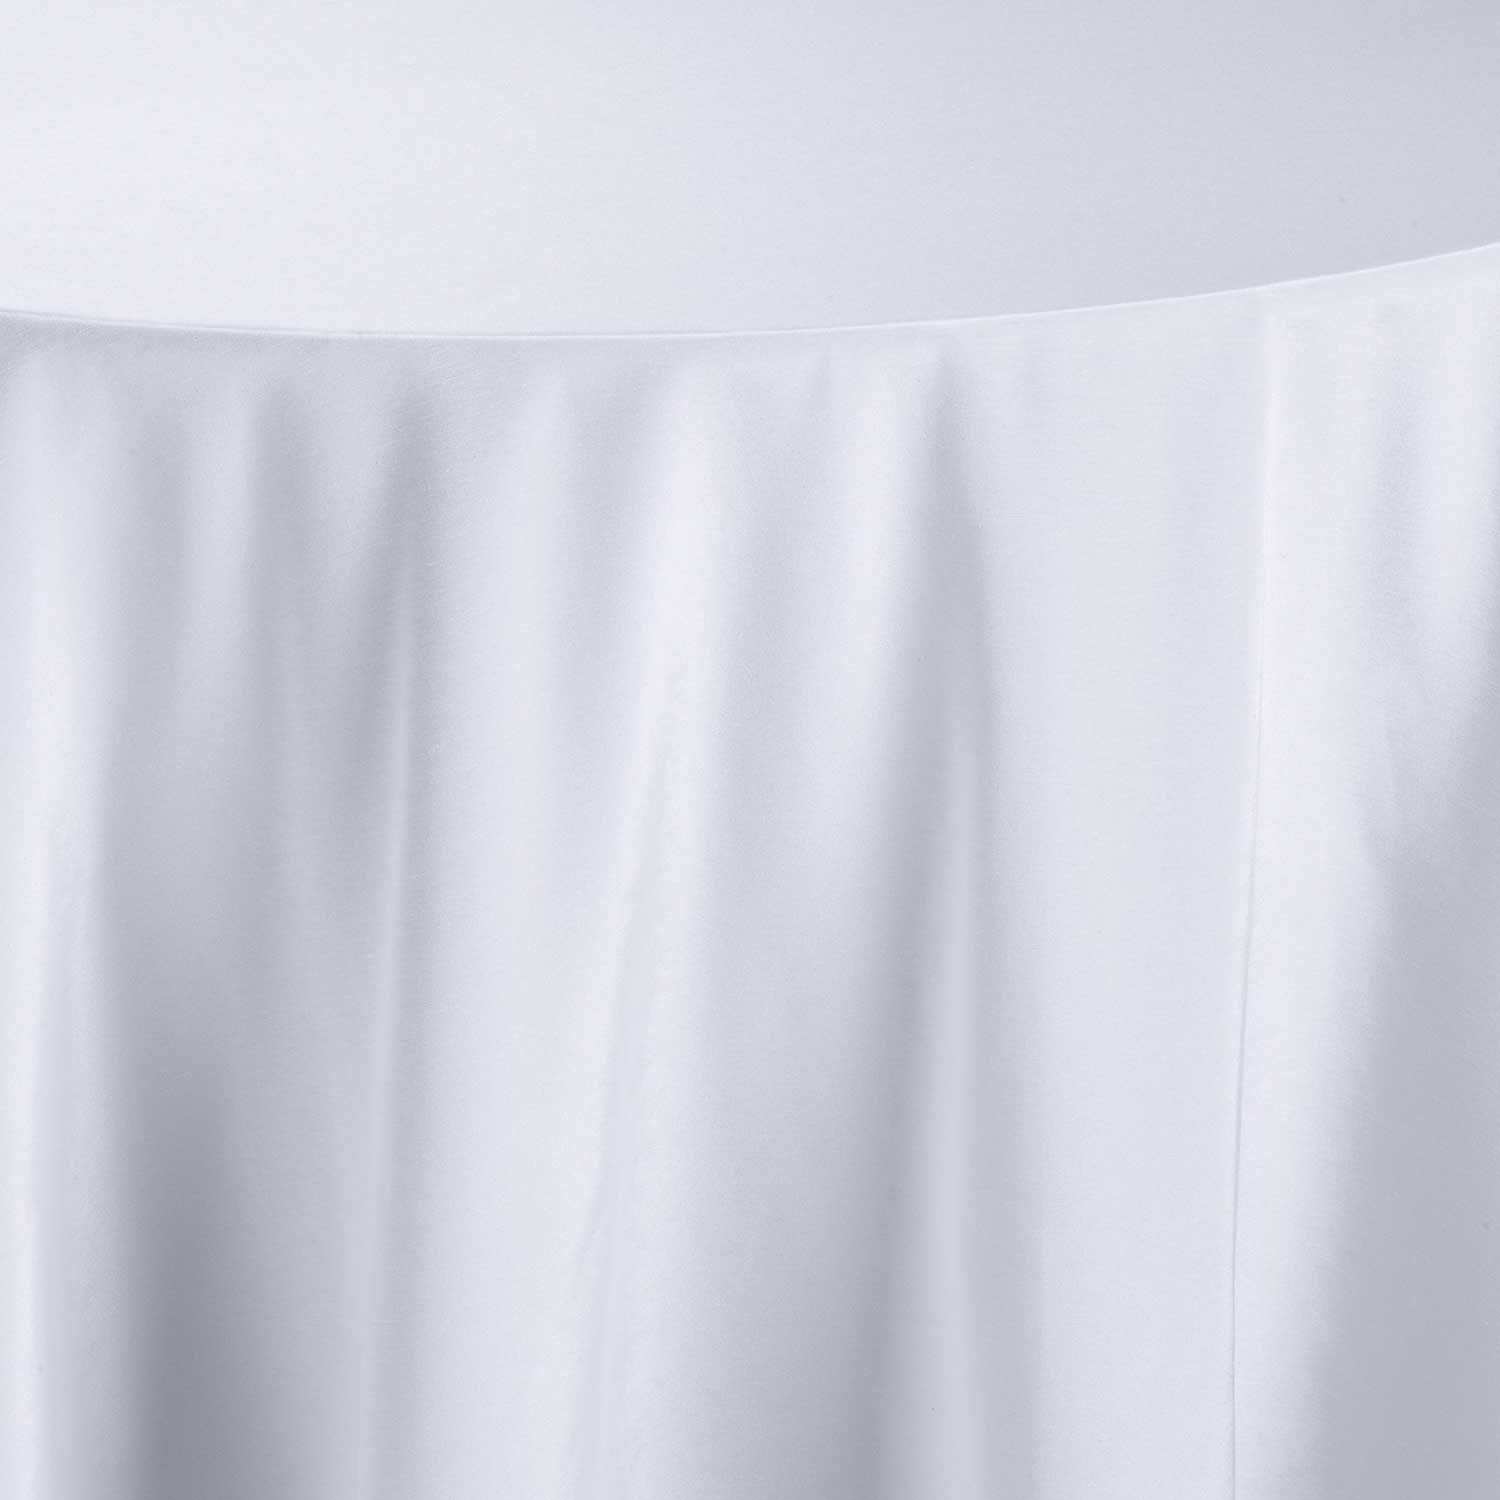 Bengaline White Table Linen - Linen Rentals, Wedding Table Linen, Runners,  Chair Covers